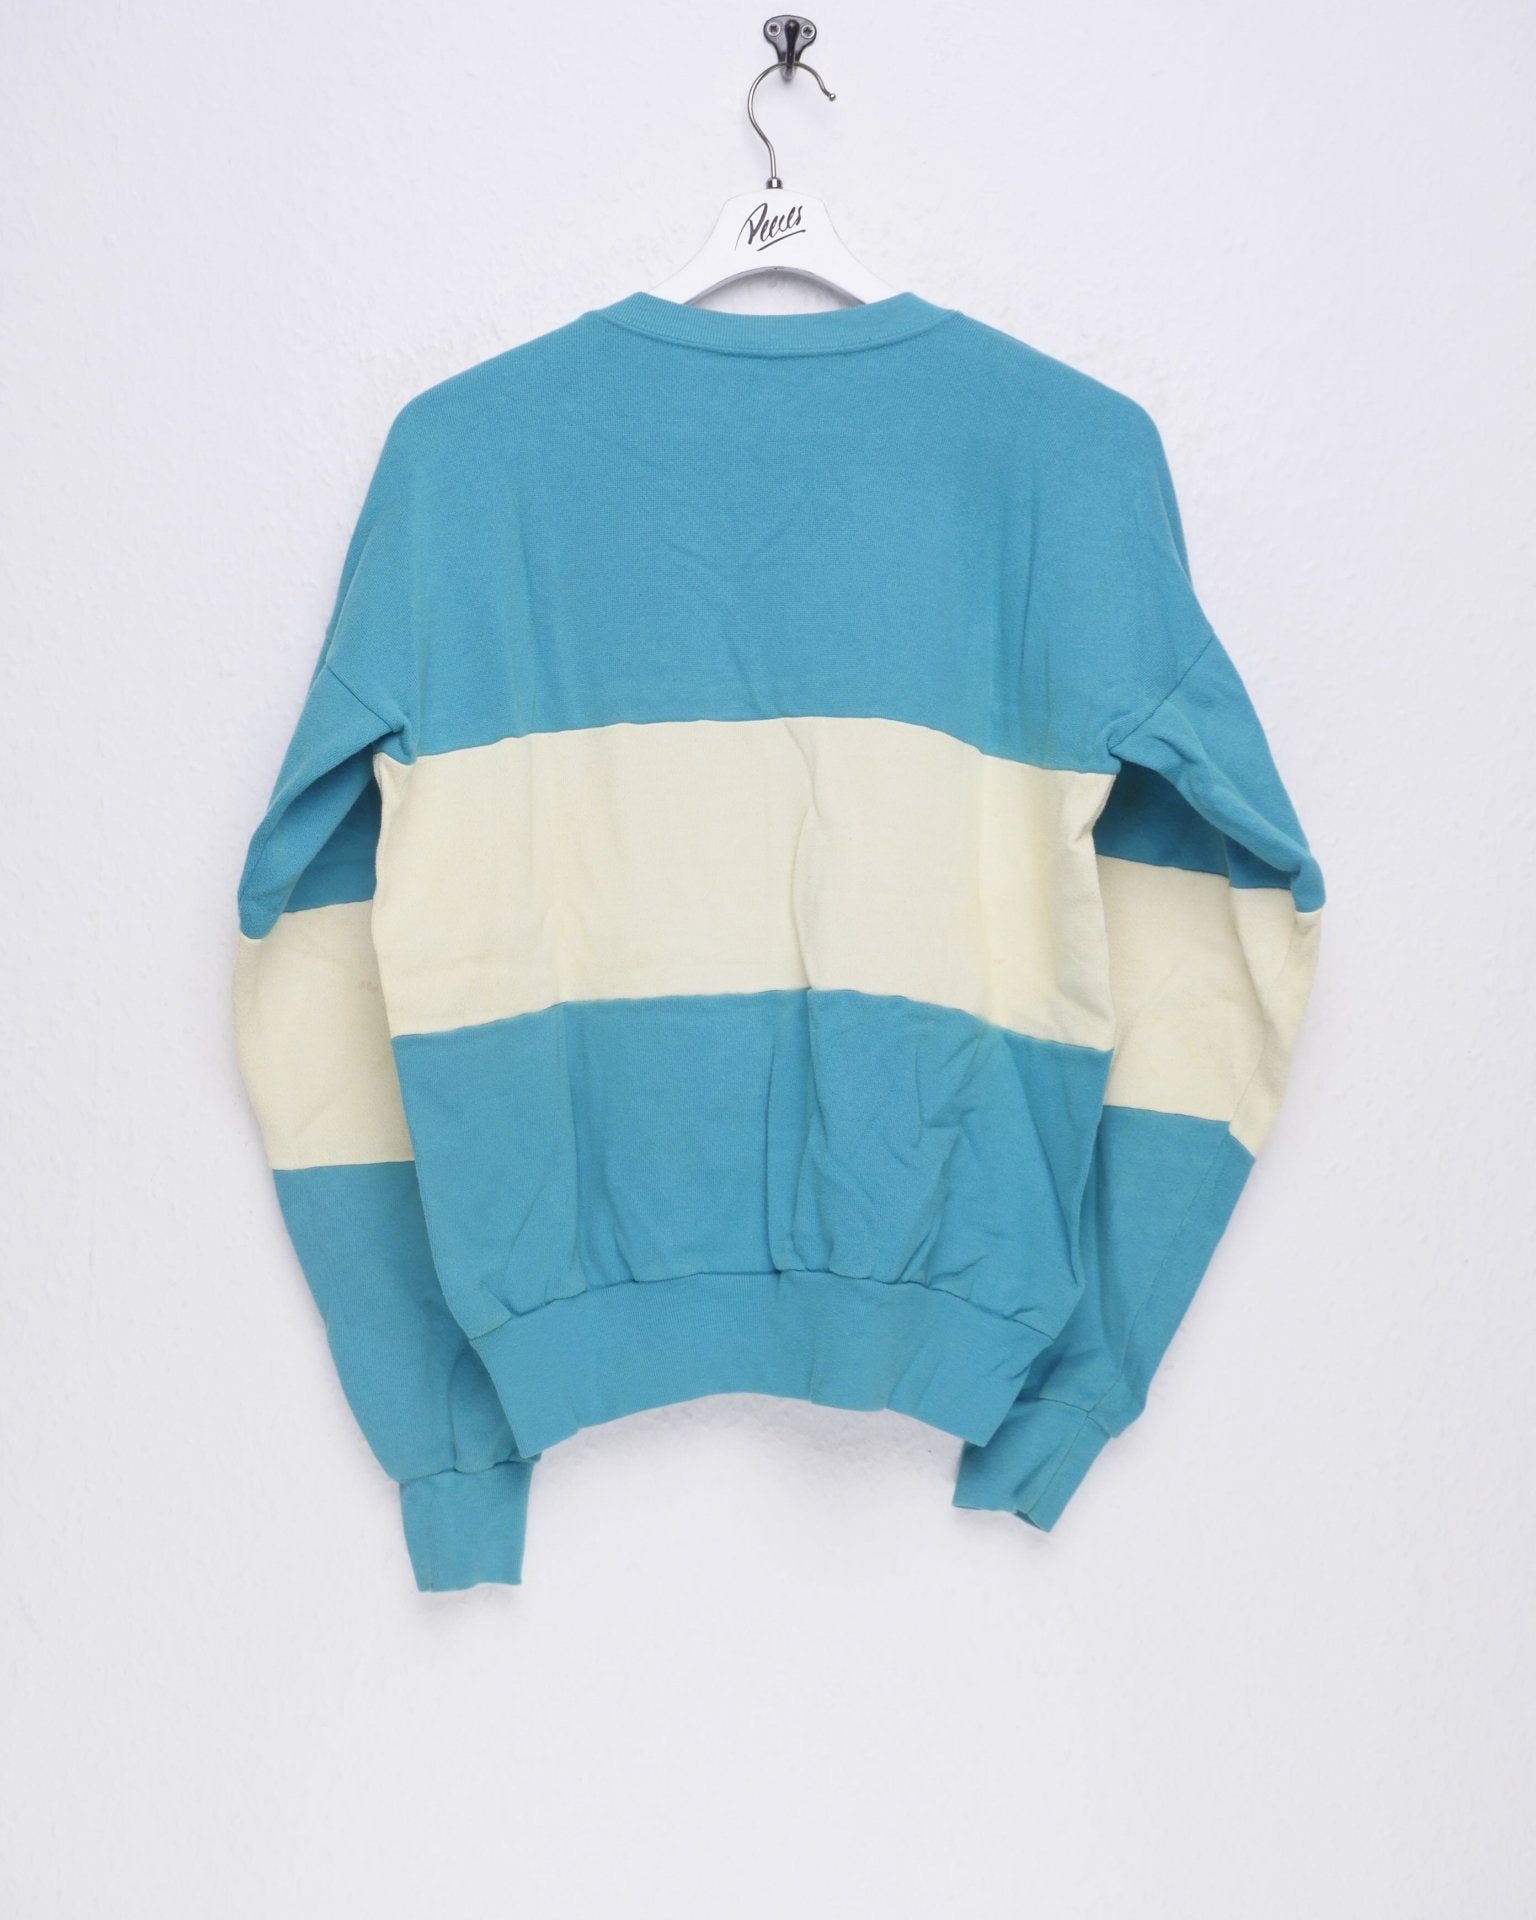 Boston printed Spellout Vintage Sweater - Peeces